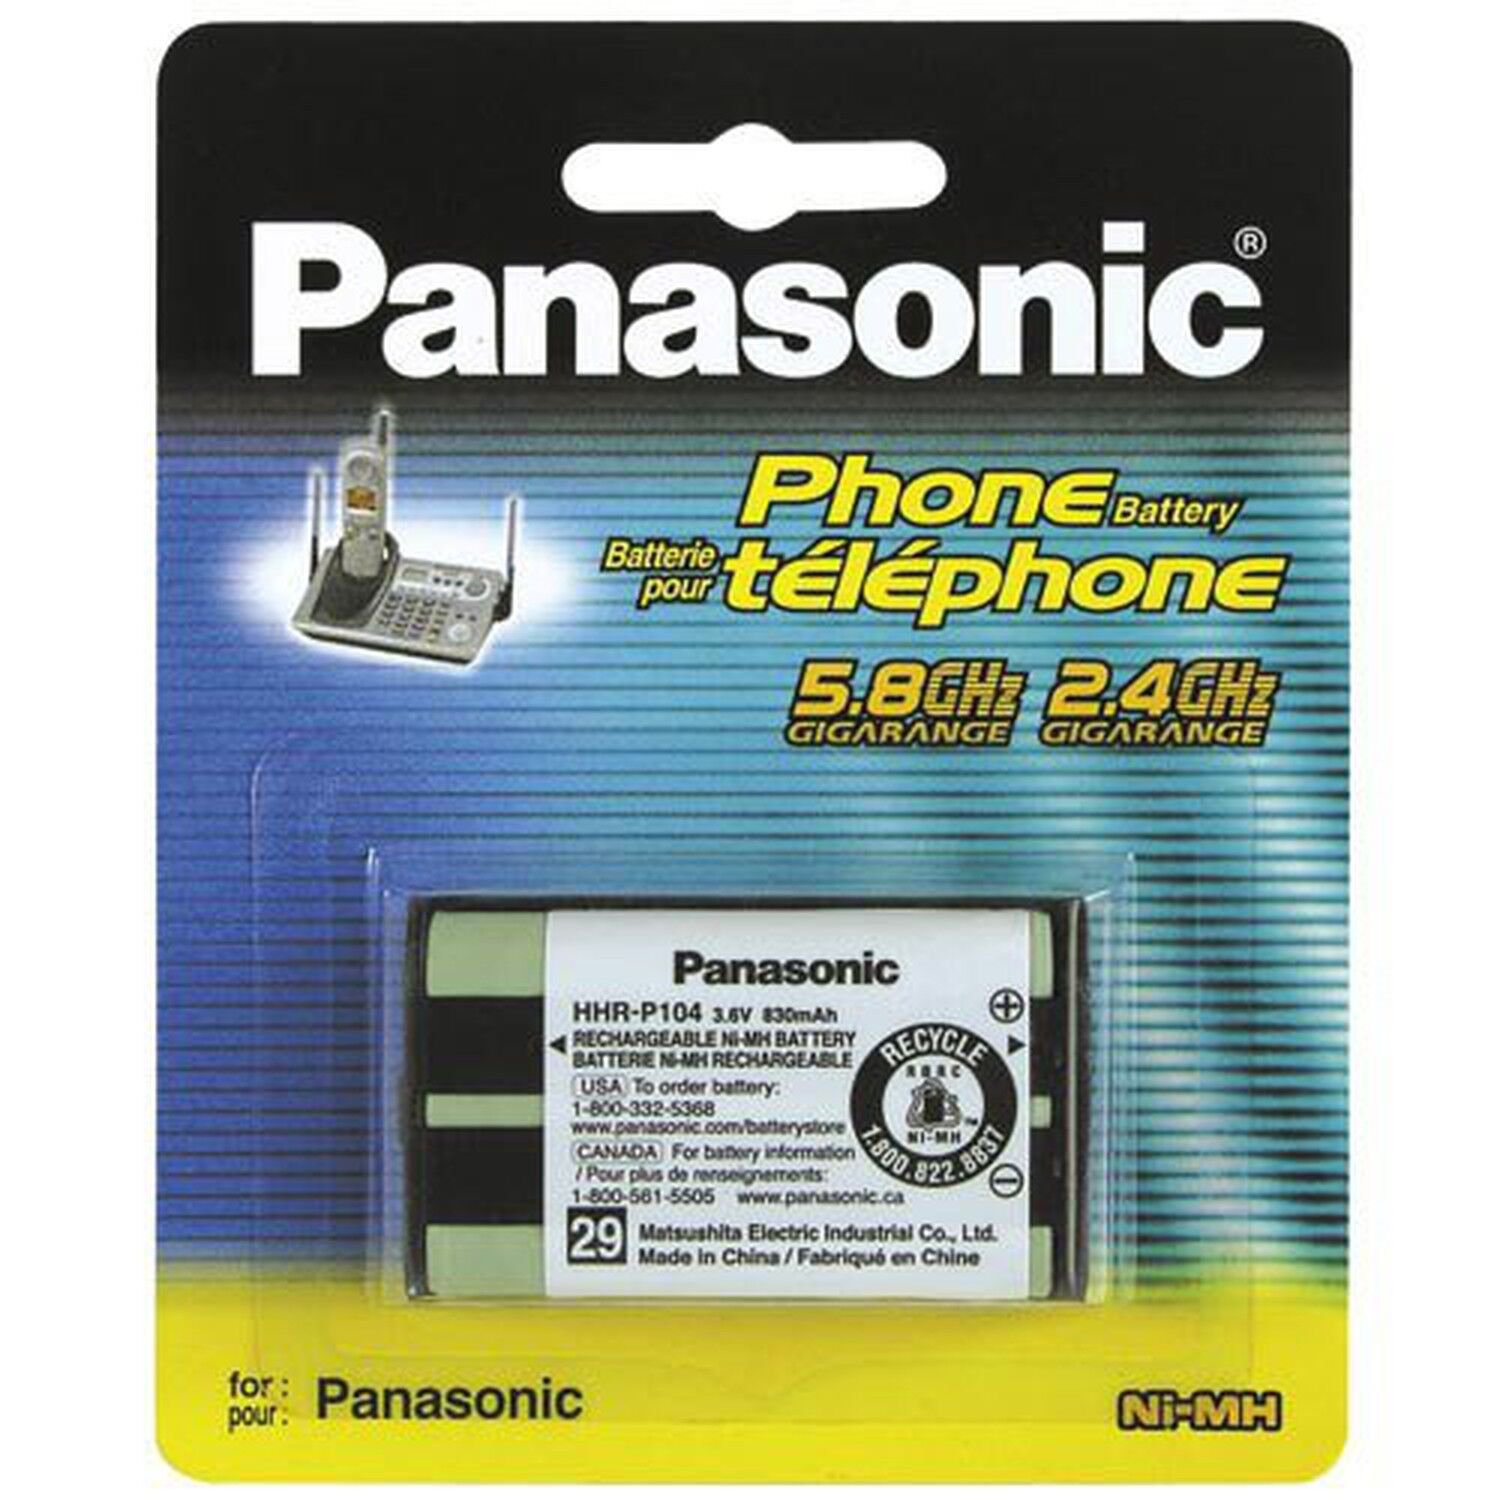 Panasonic Cordless Telephone Battery Replacement Type 29 (HHR-P104A)